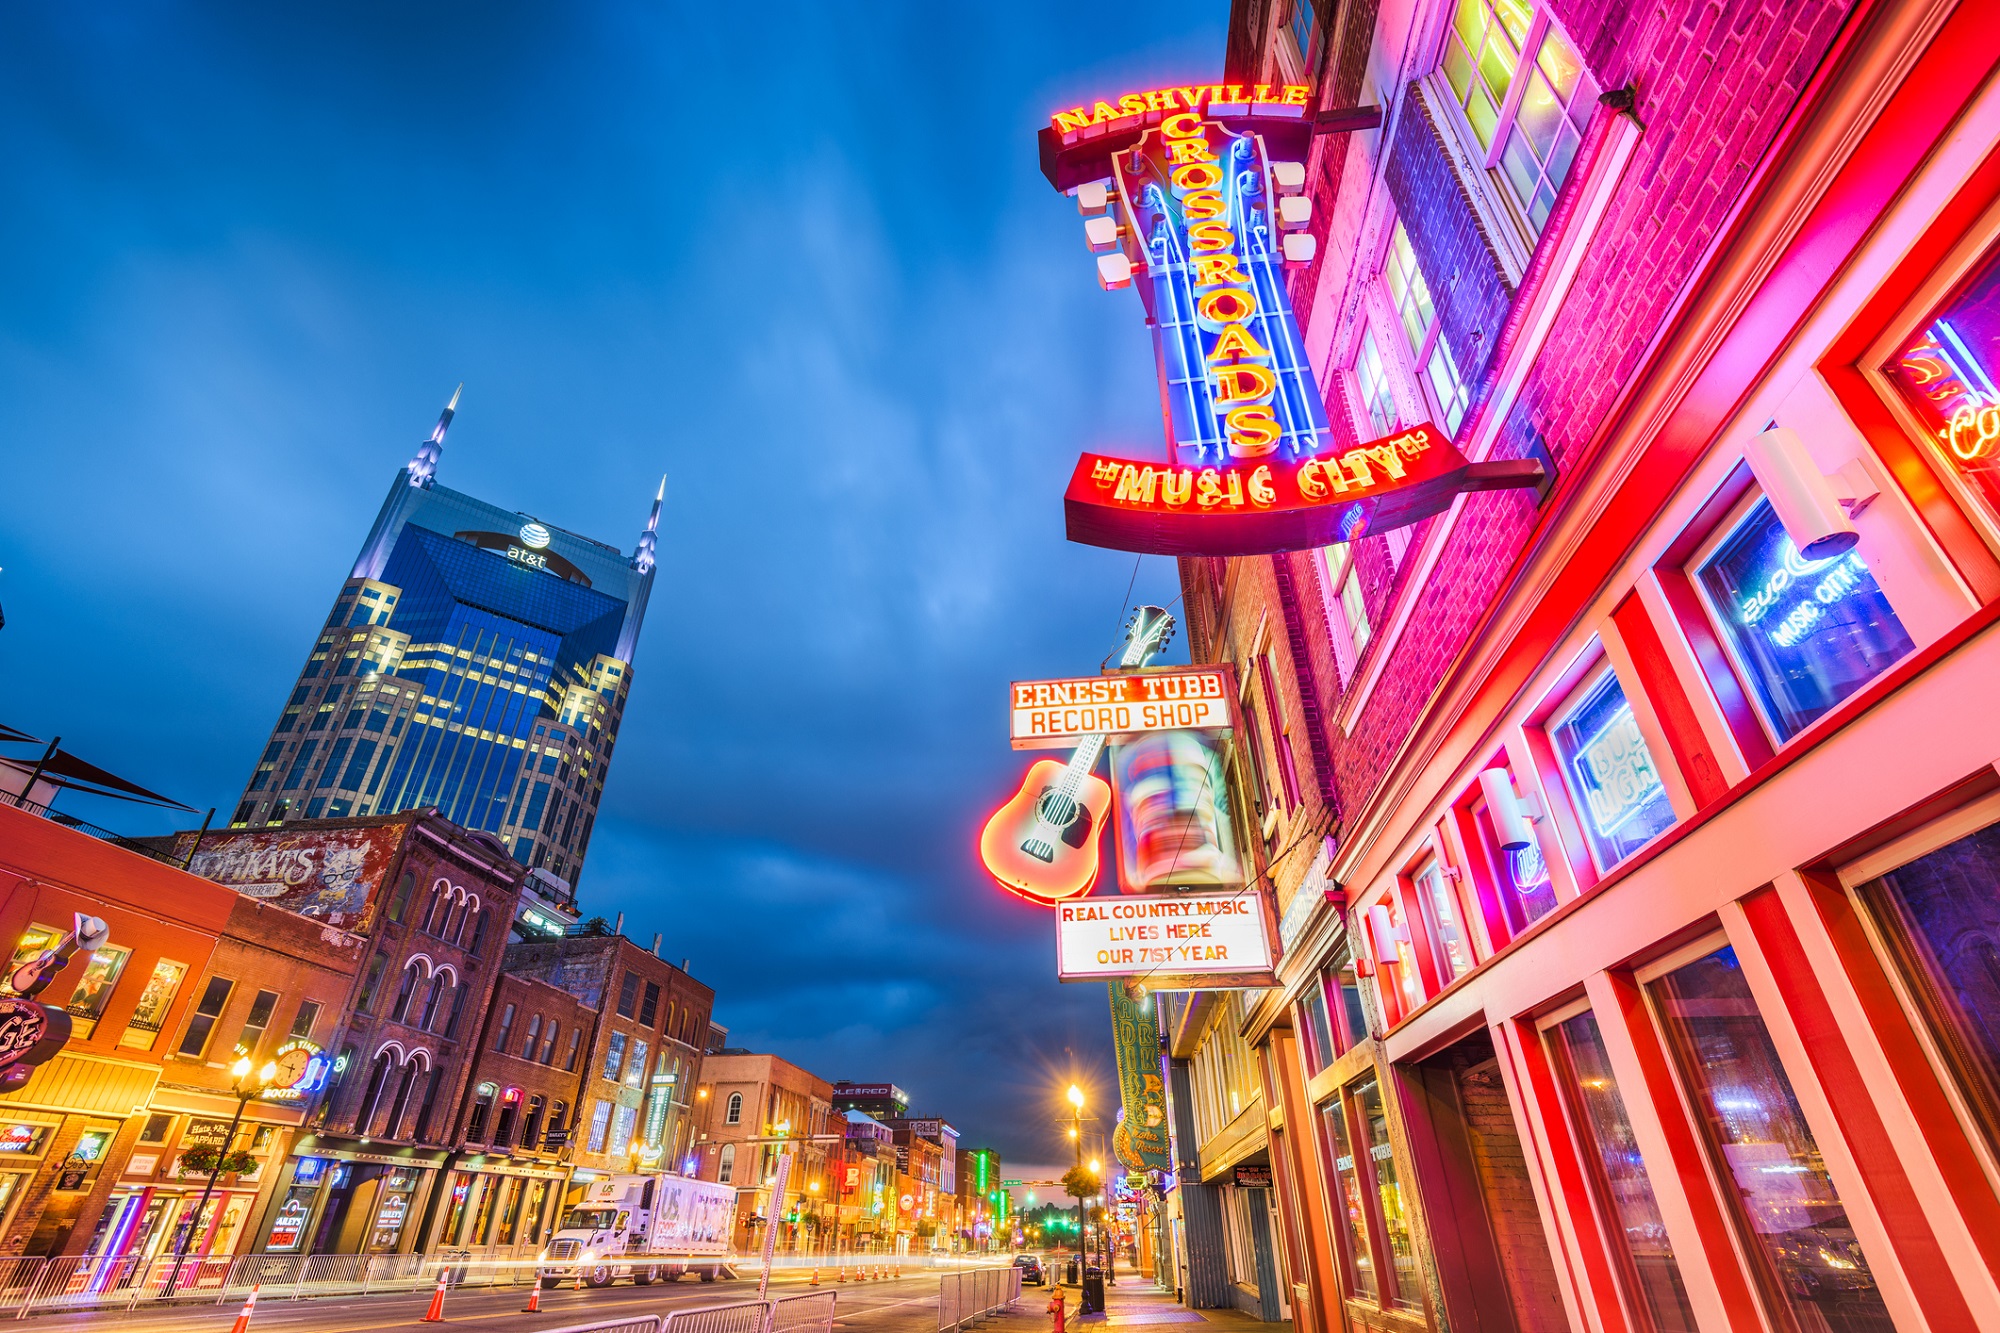 View of restaurants in bars in Nashville, TN